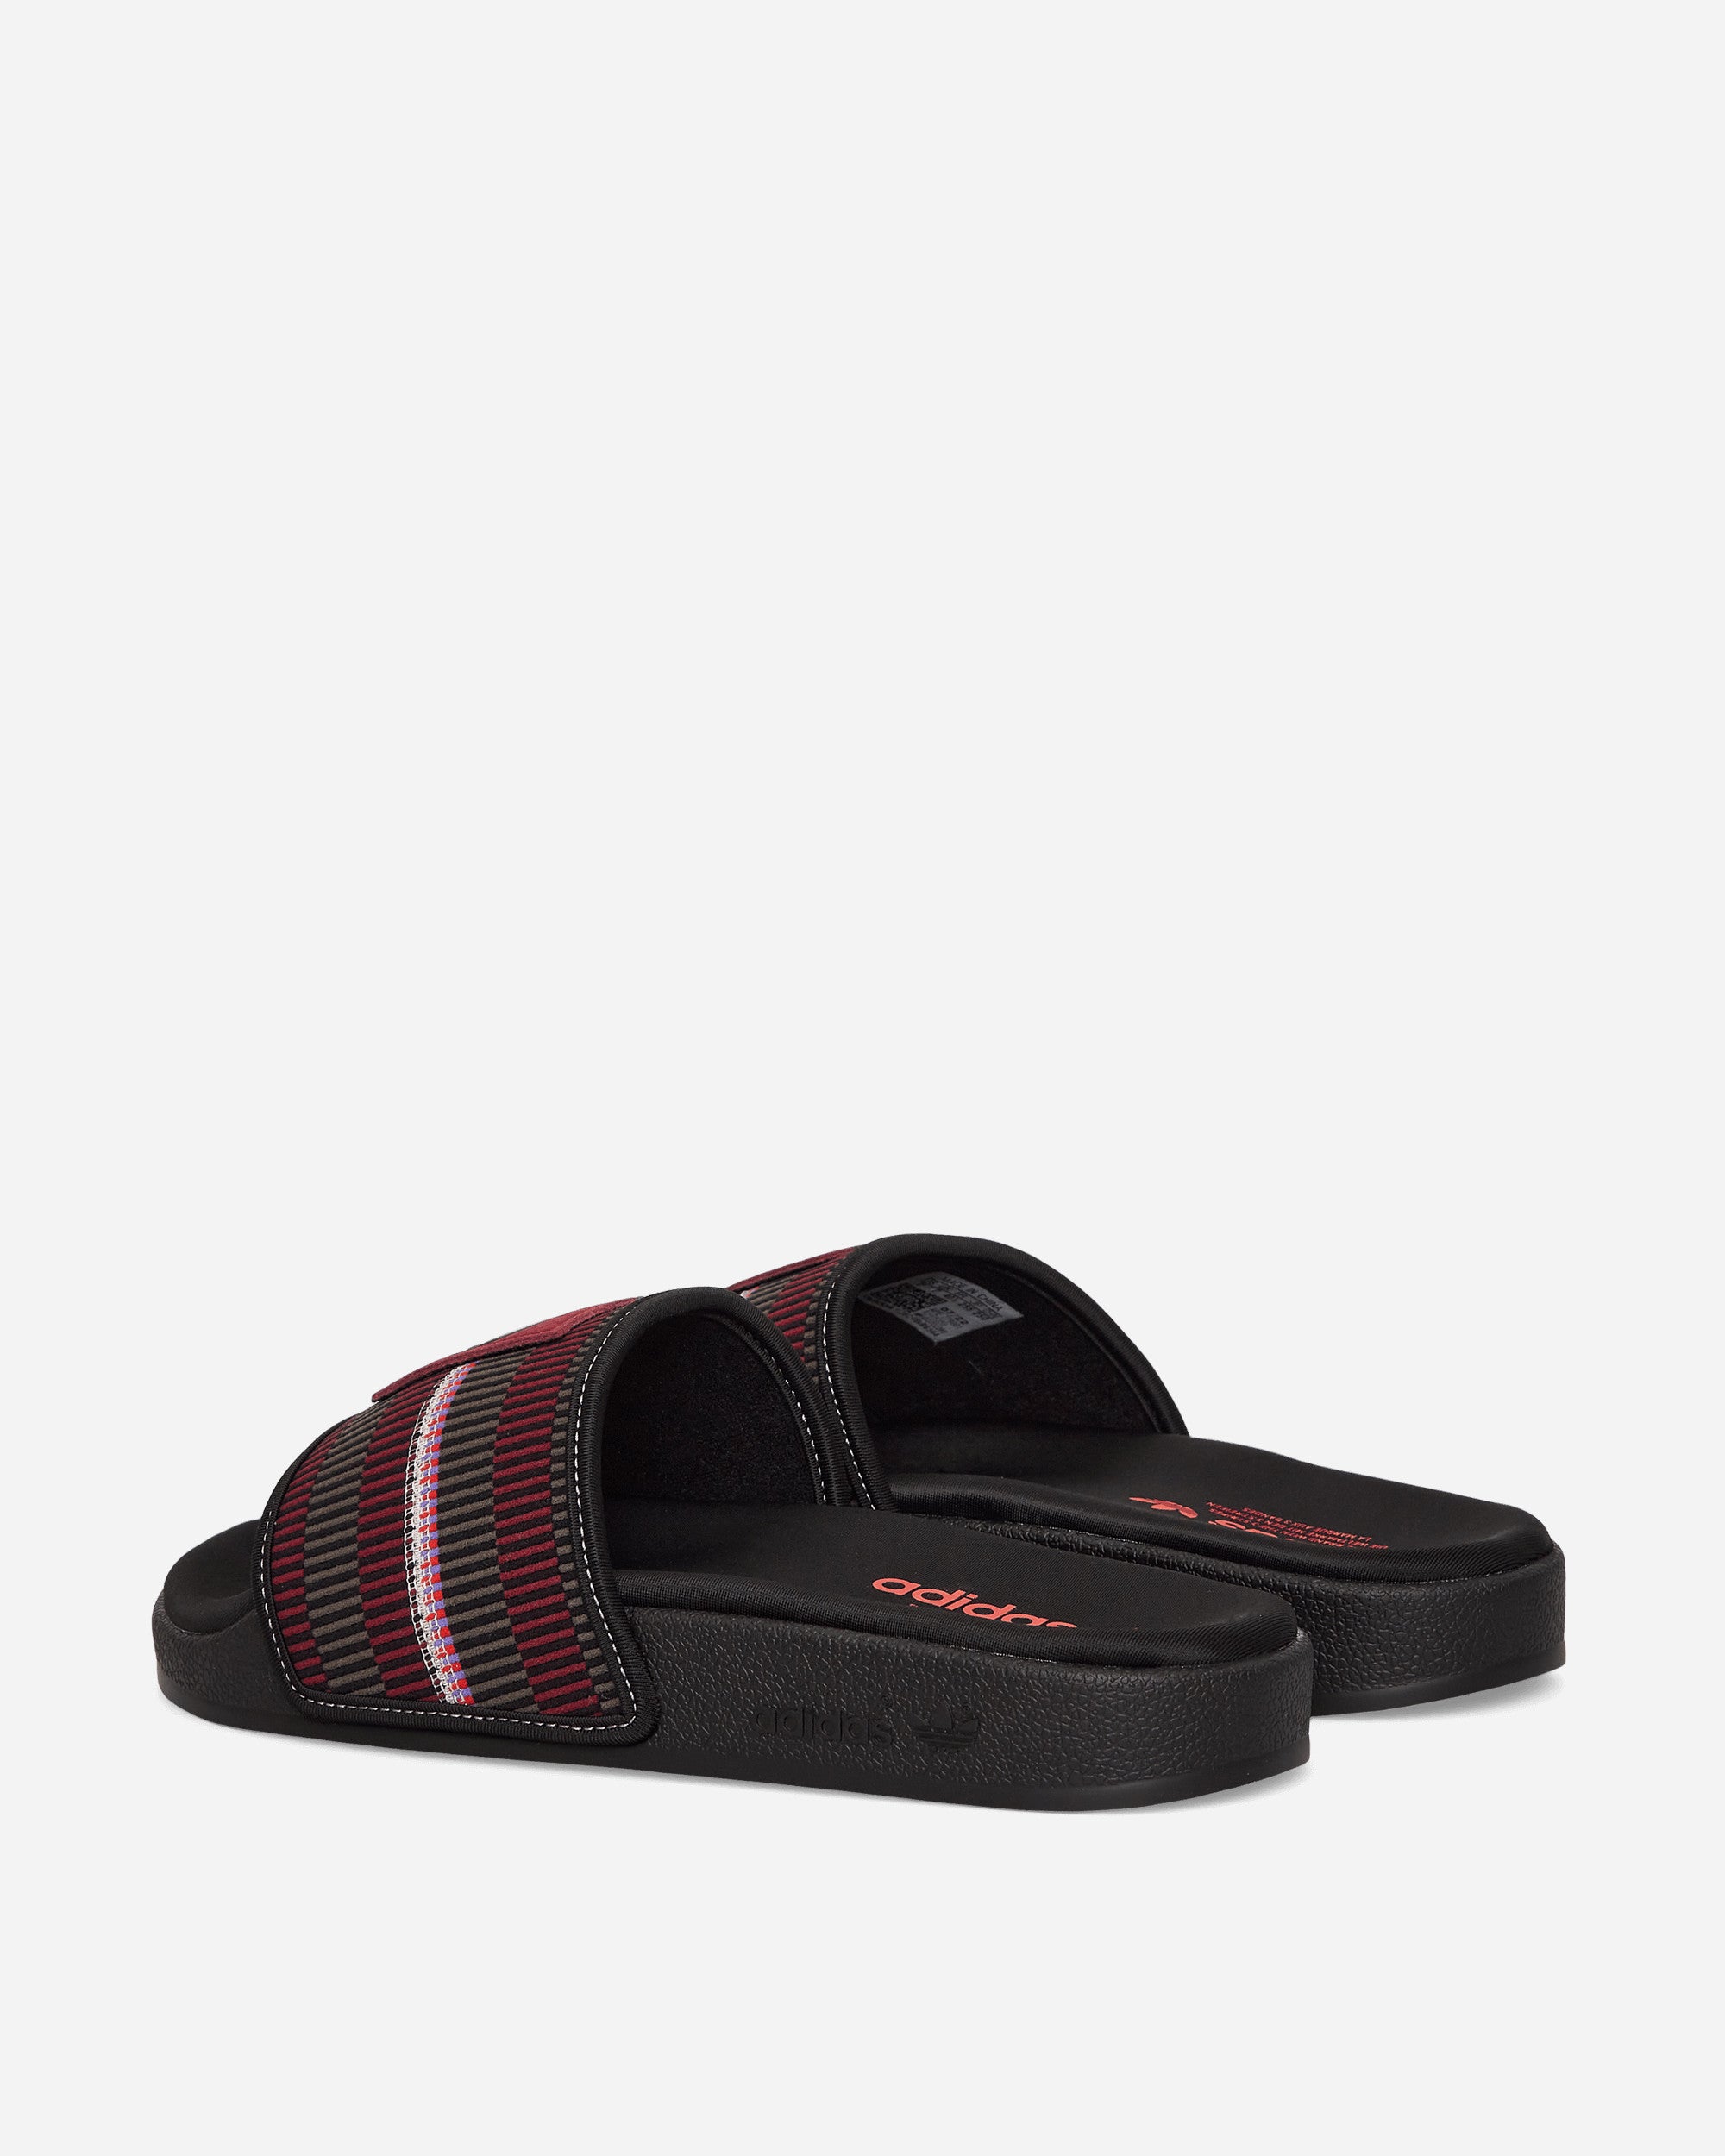 adidas Originals Adilette Patchwork Cblack/Purple/Shaoli Sandals and Slides Slides HP5358